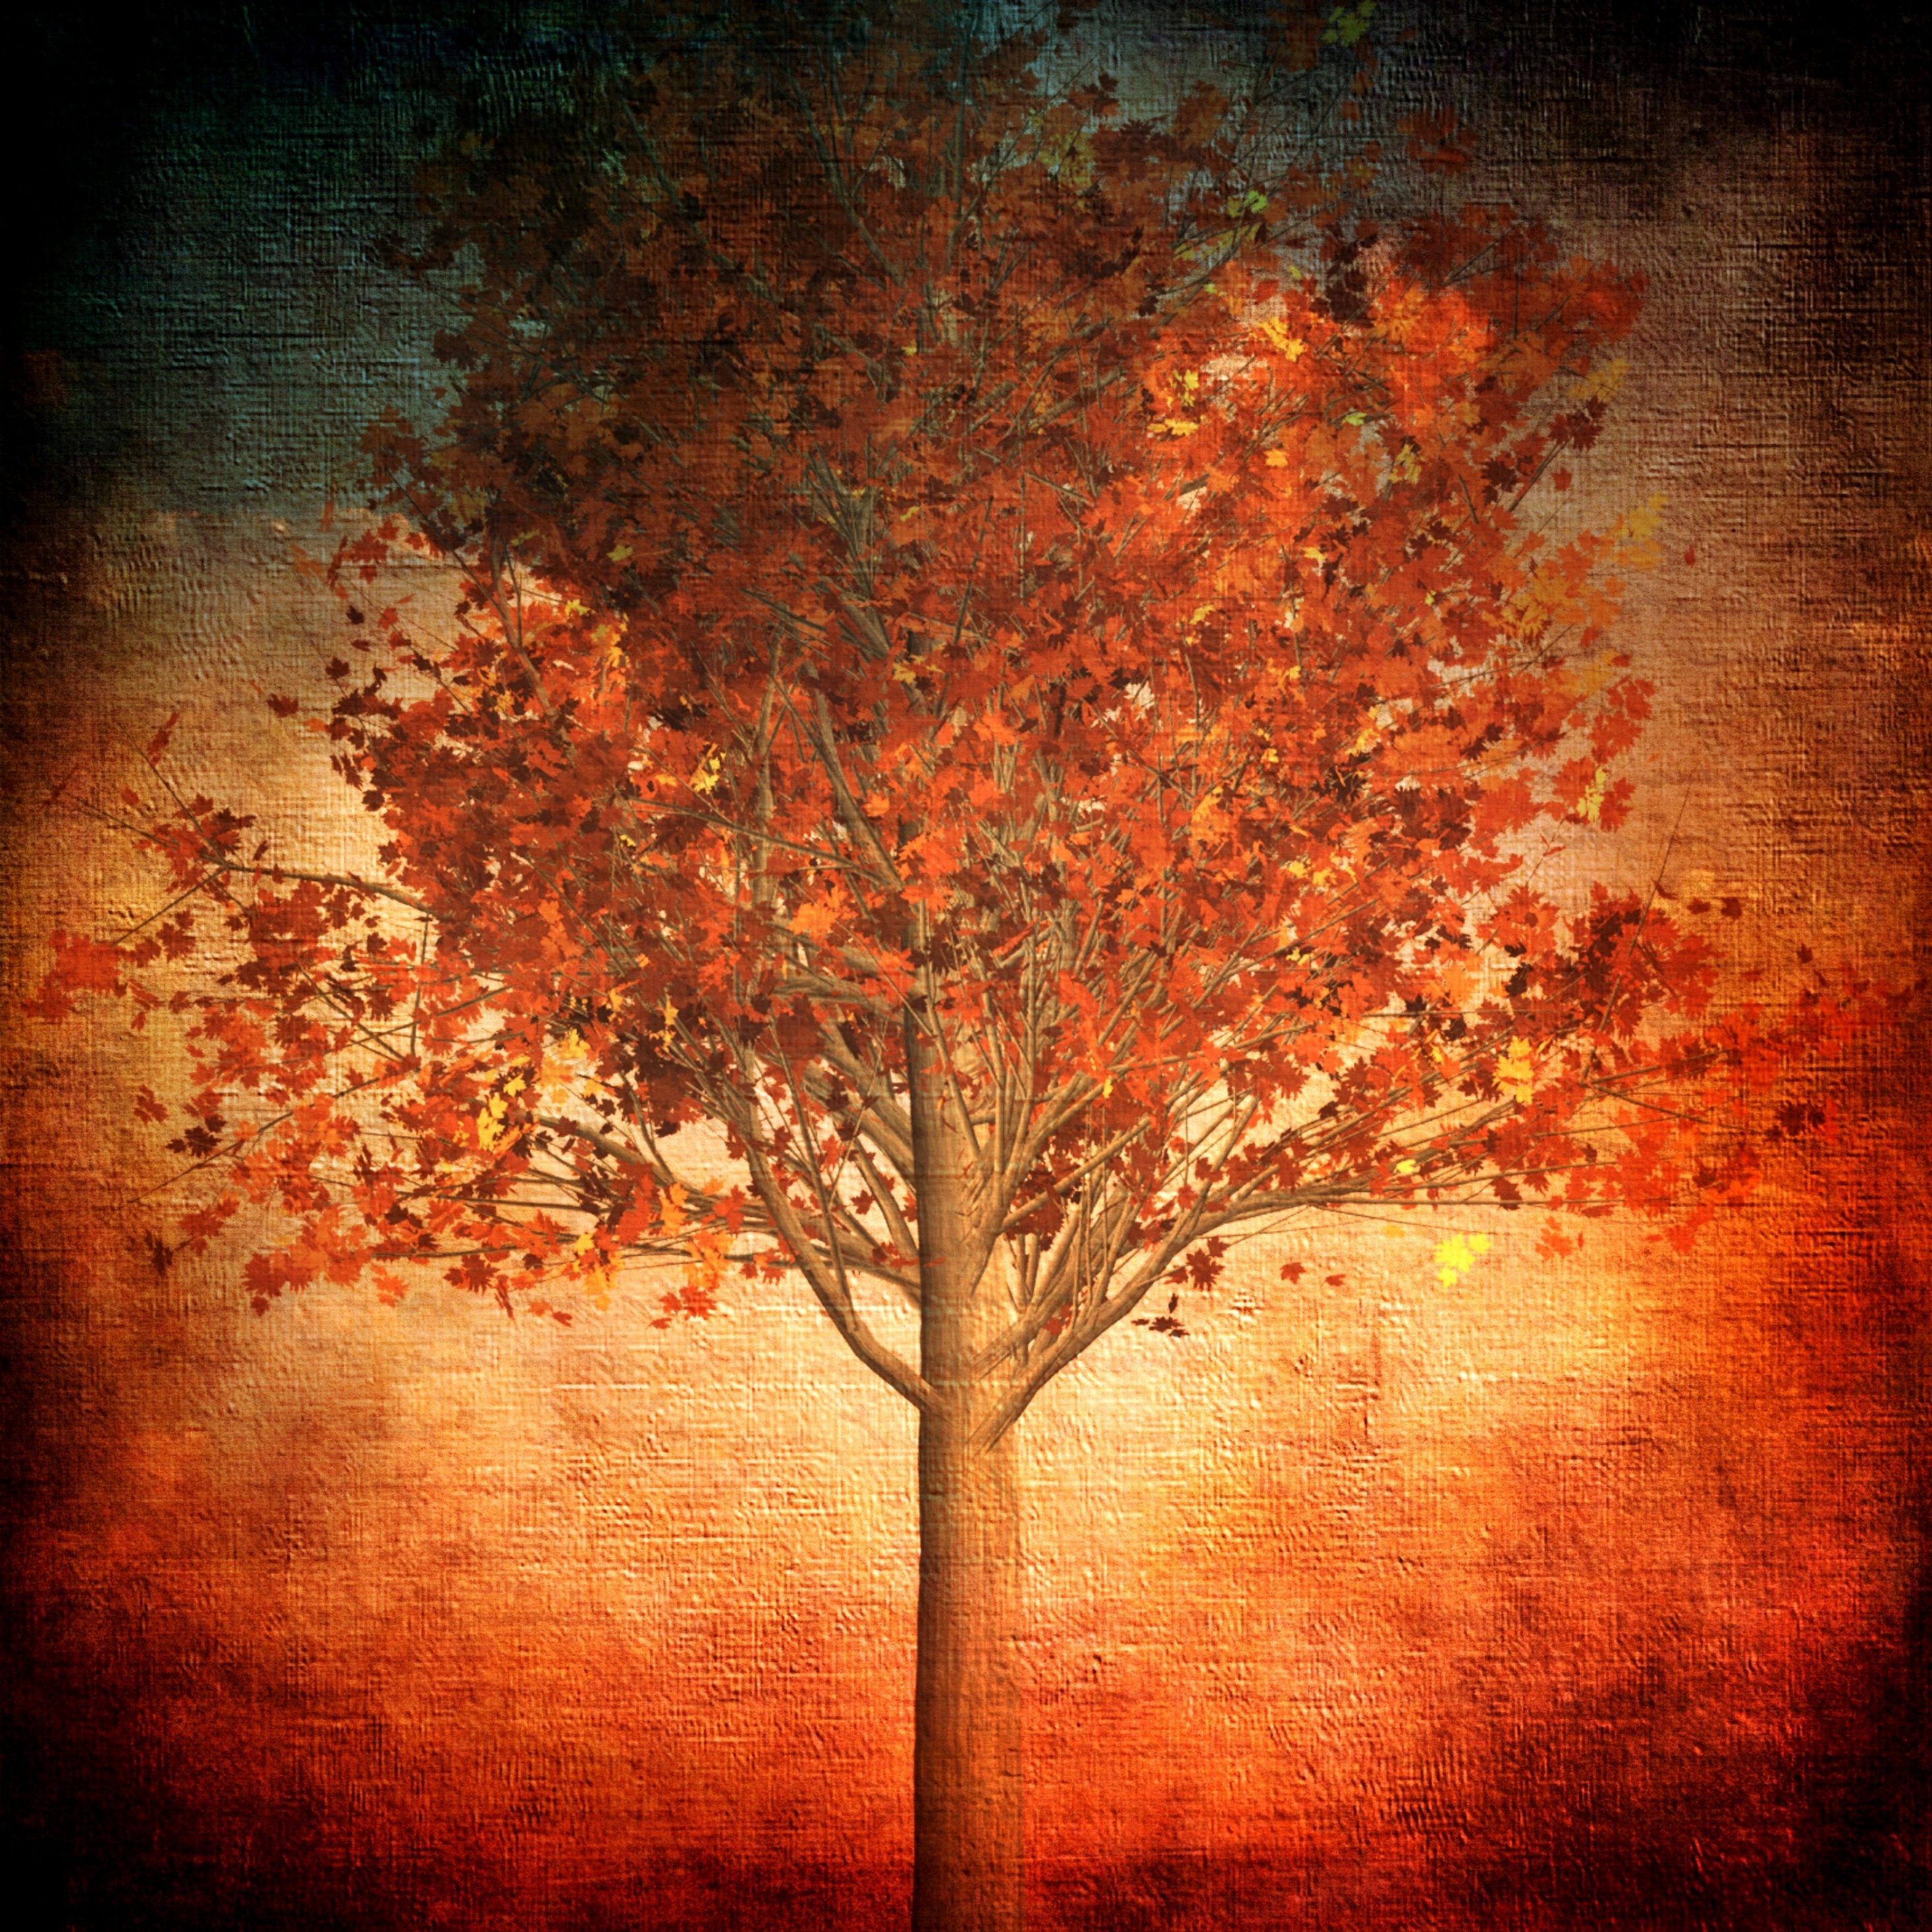 2934x2934 iOS iPad wallpaper 4k Aesthetic Autumn Red Fall Leaves Nature iPad Wallpaper 2934x2934 pixels resolution